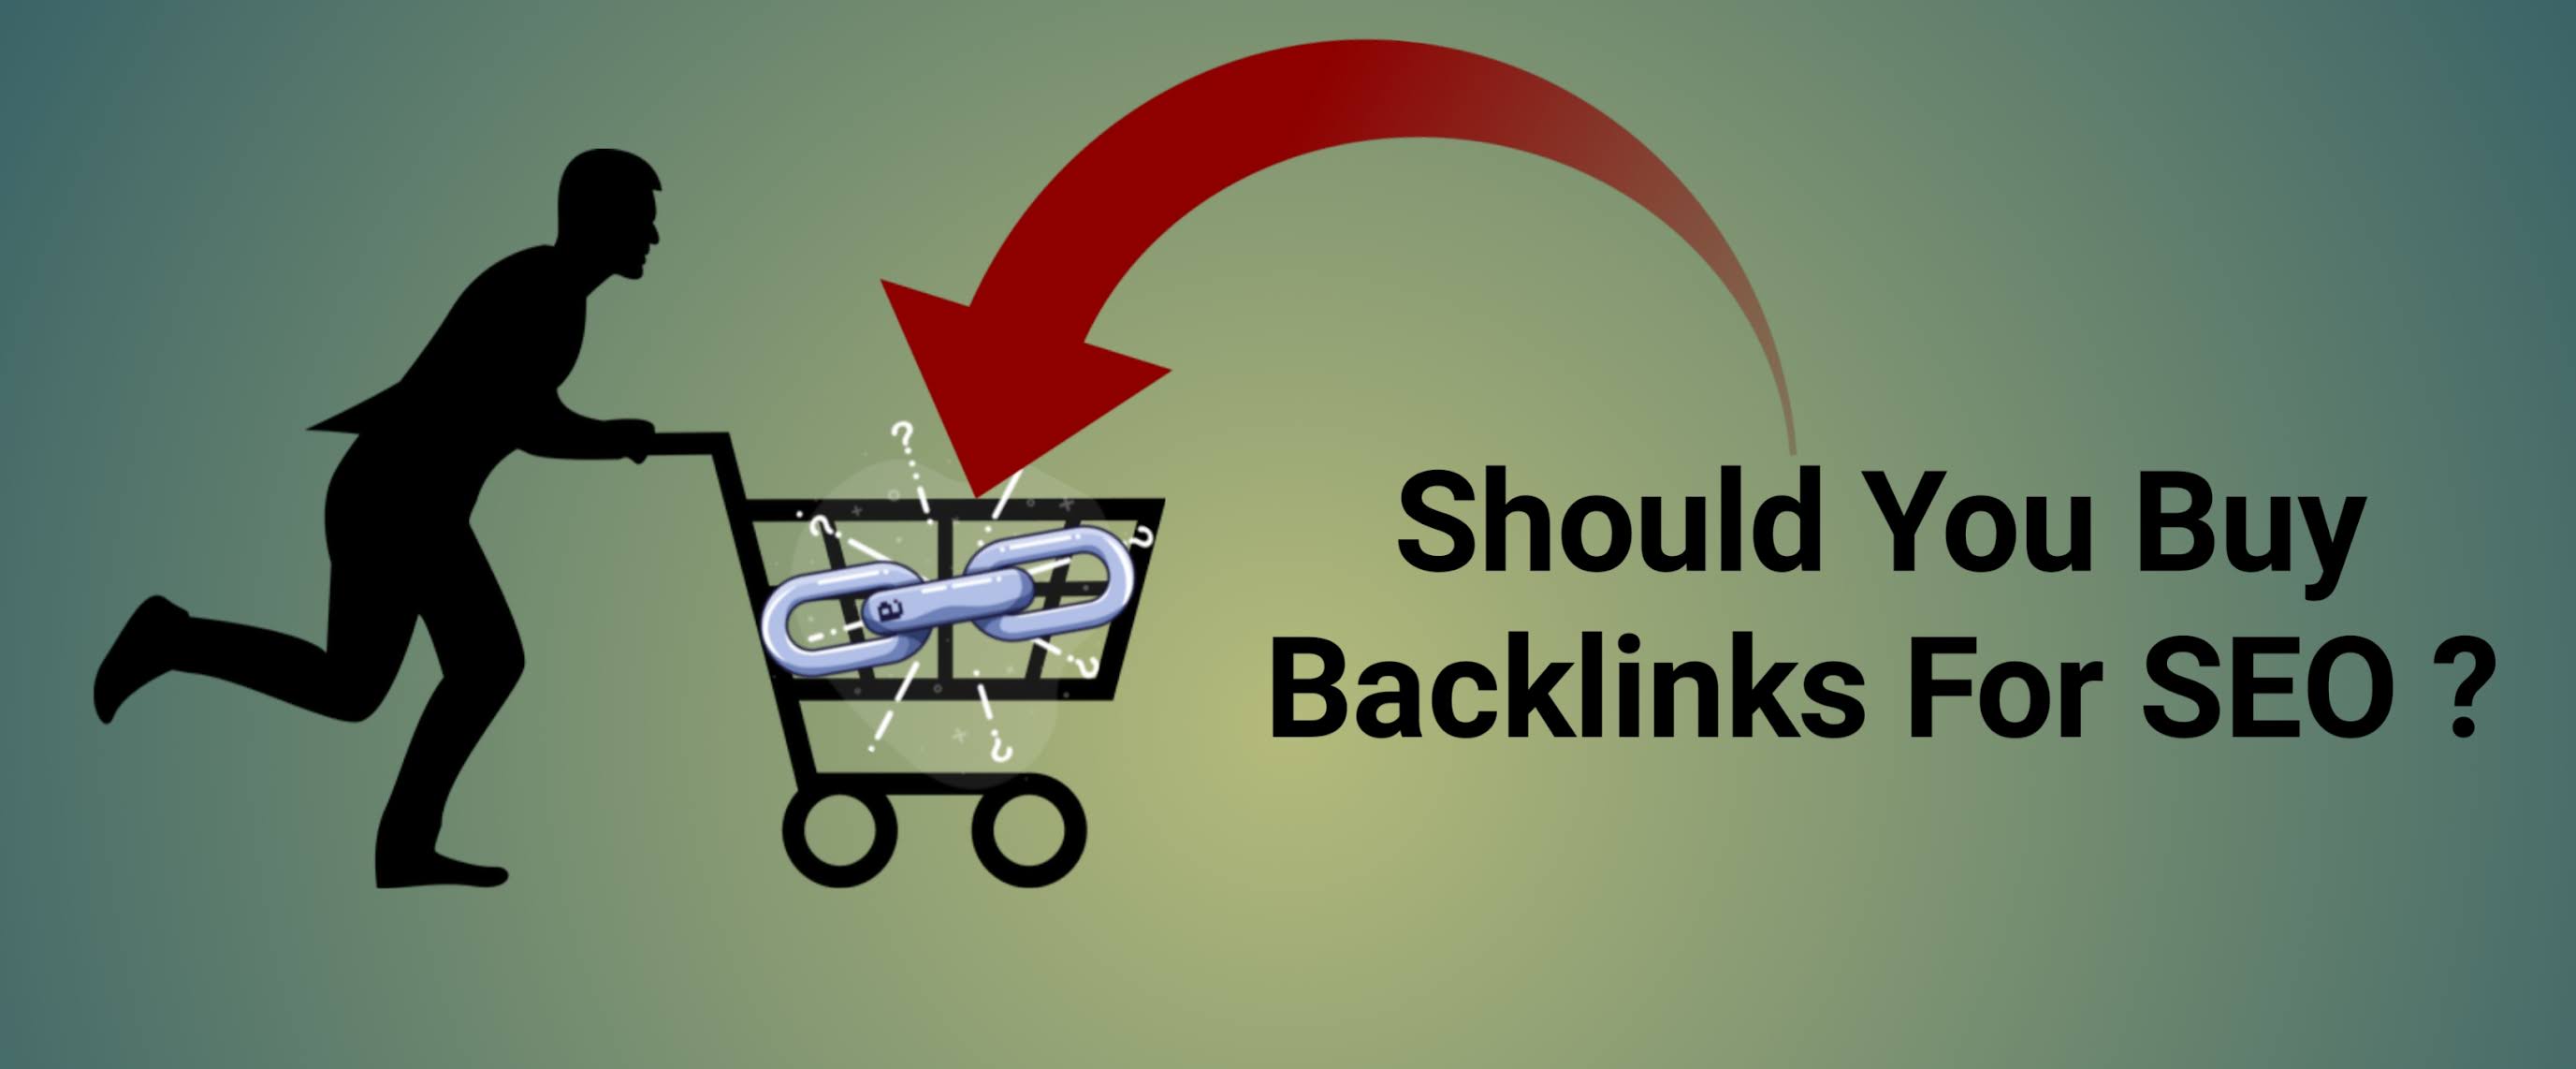 Should You Buy Backlinks For SEO ?